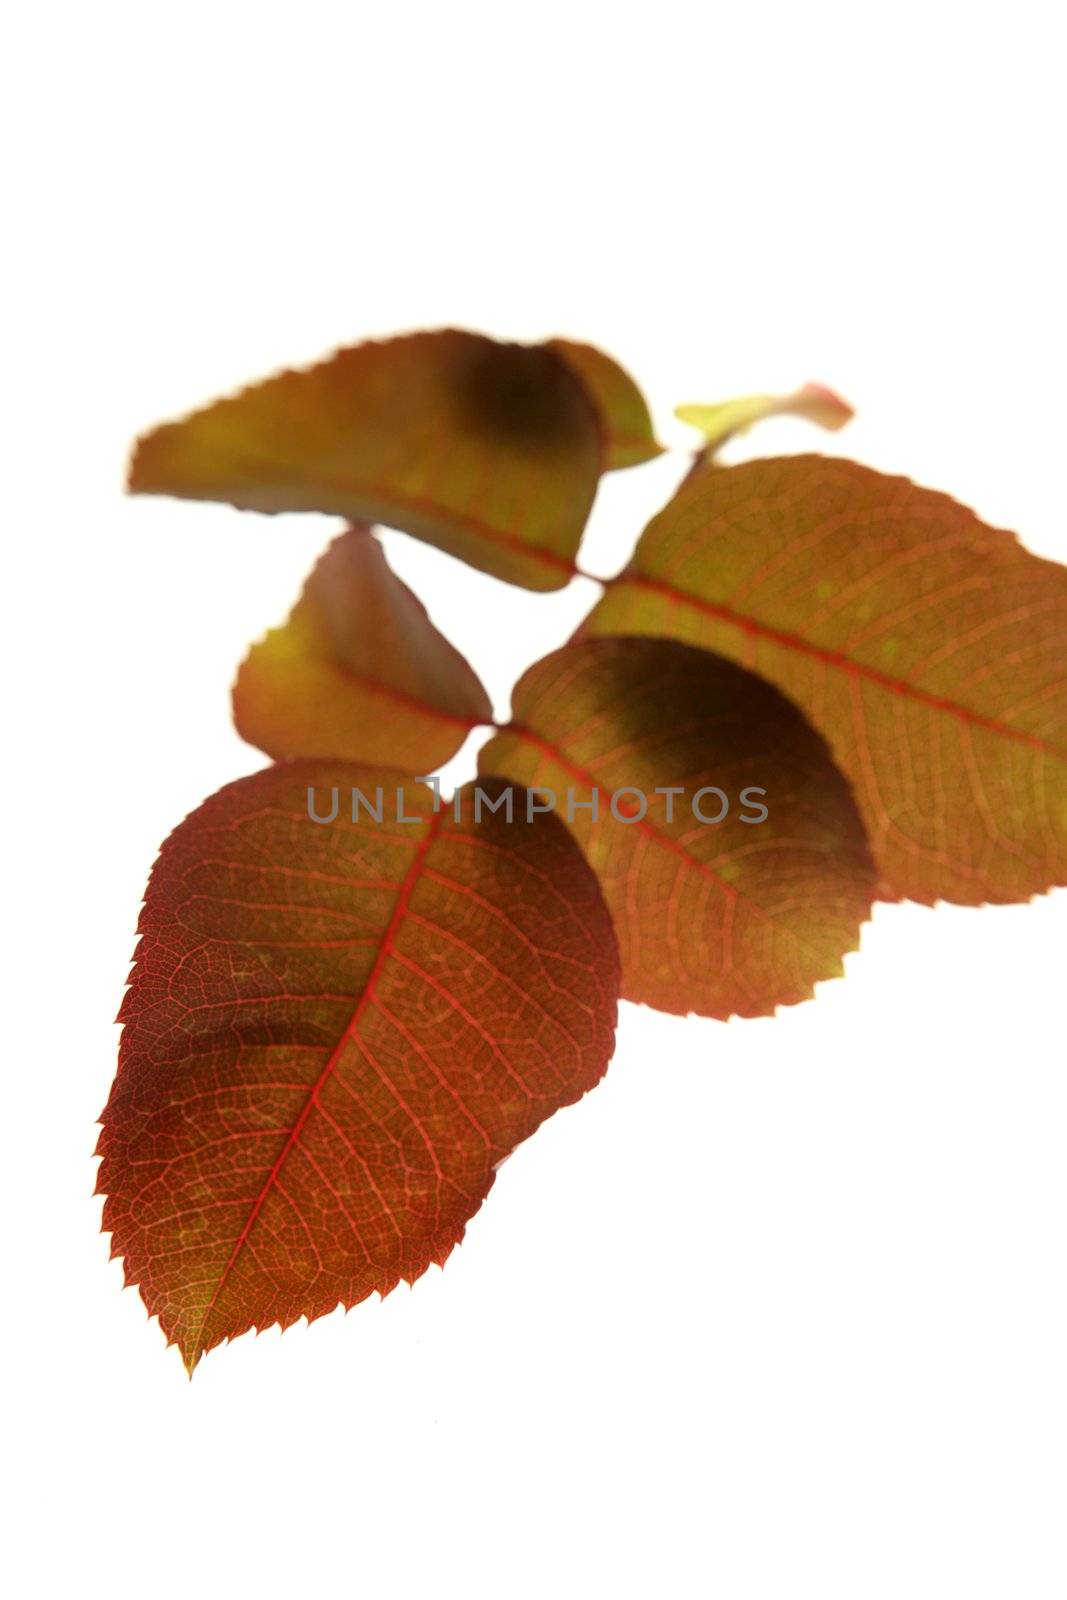 Autumn, fall leaves decorative still at studio white background by lunamarina